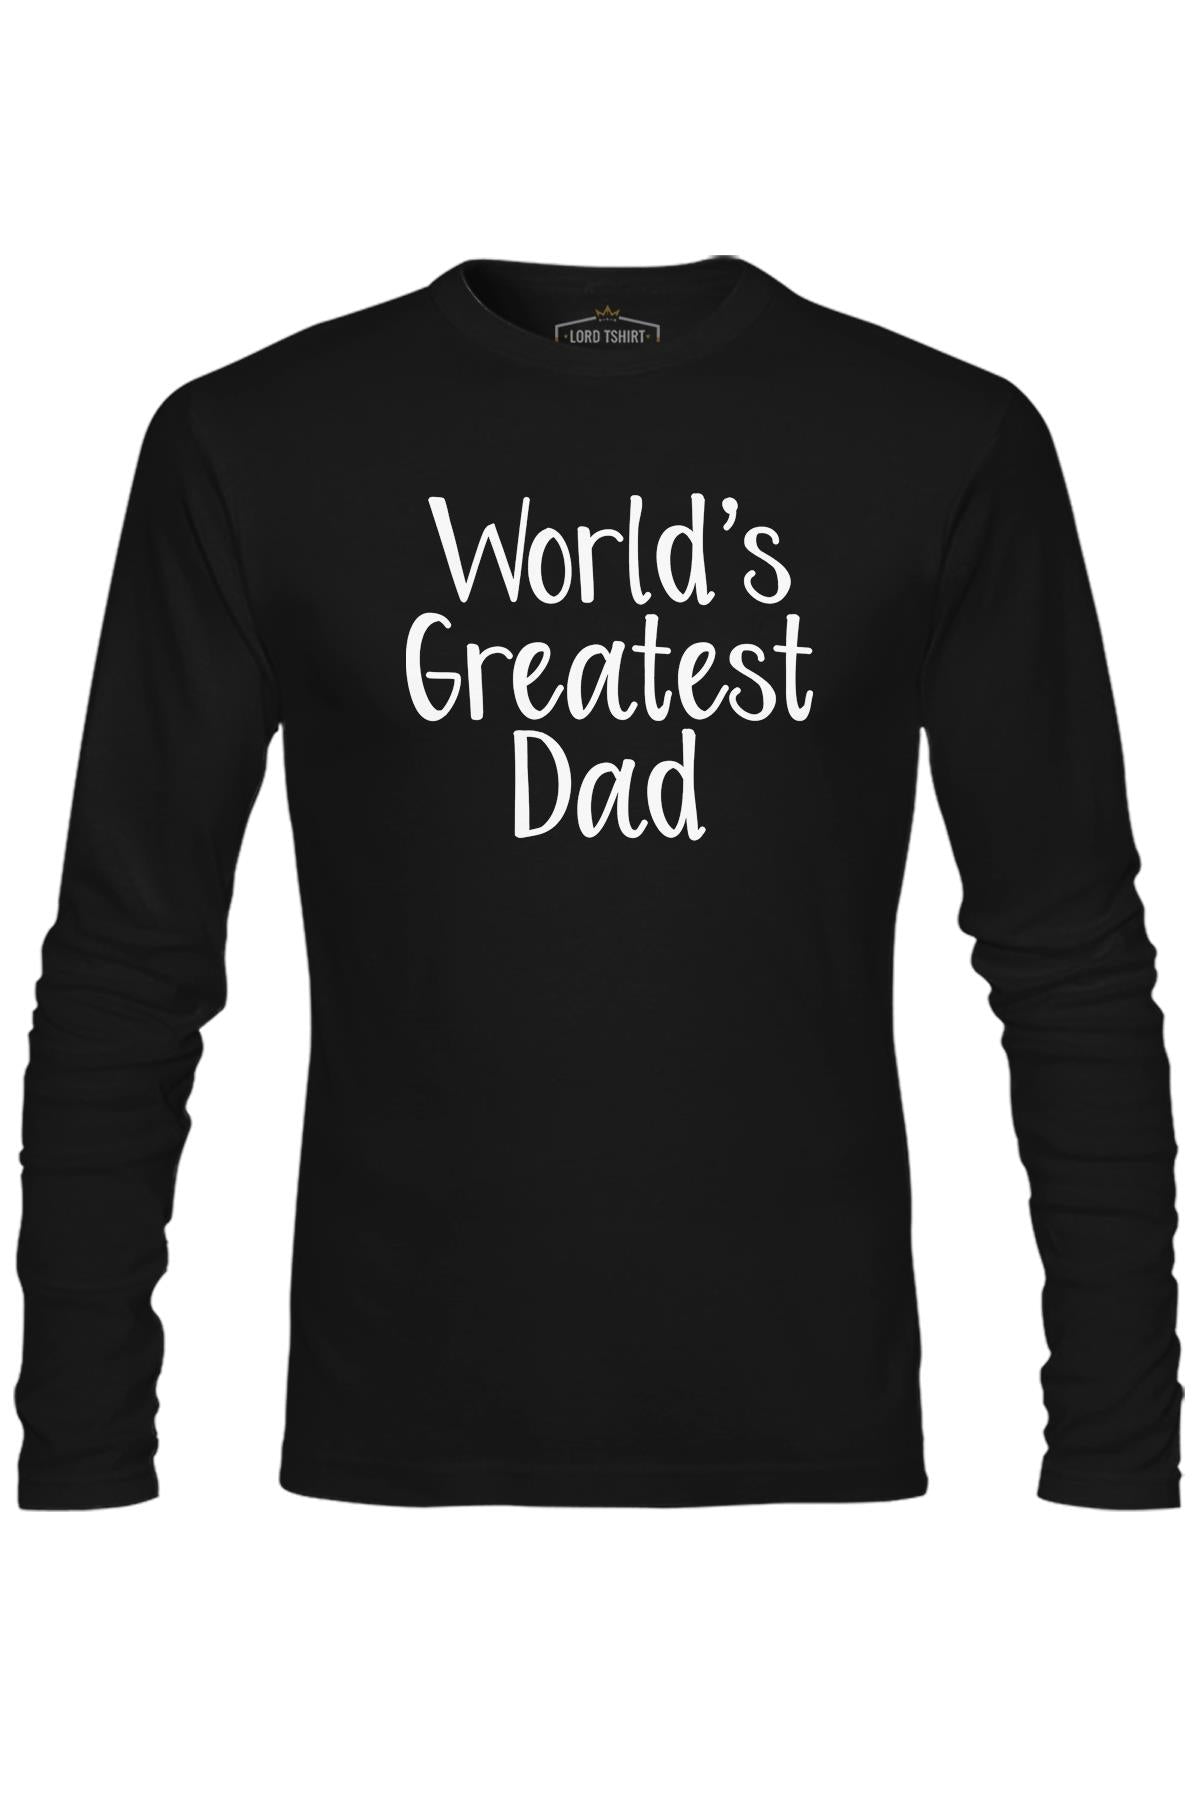 World's Greatest Dad Black Men's Sweatshirt